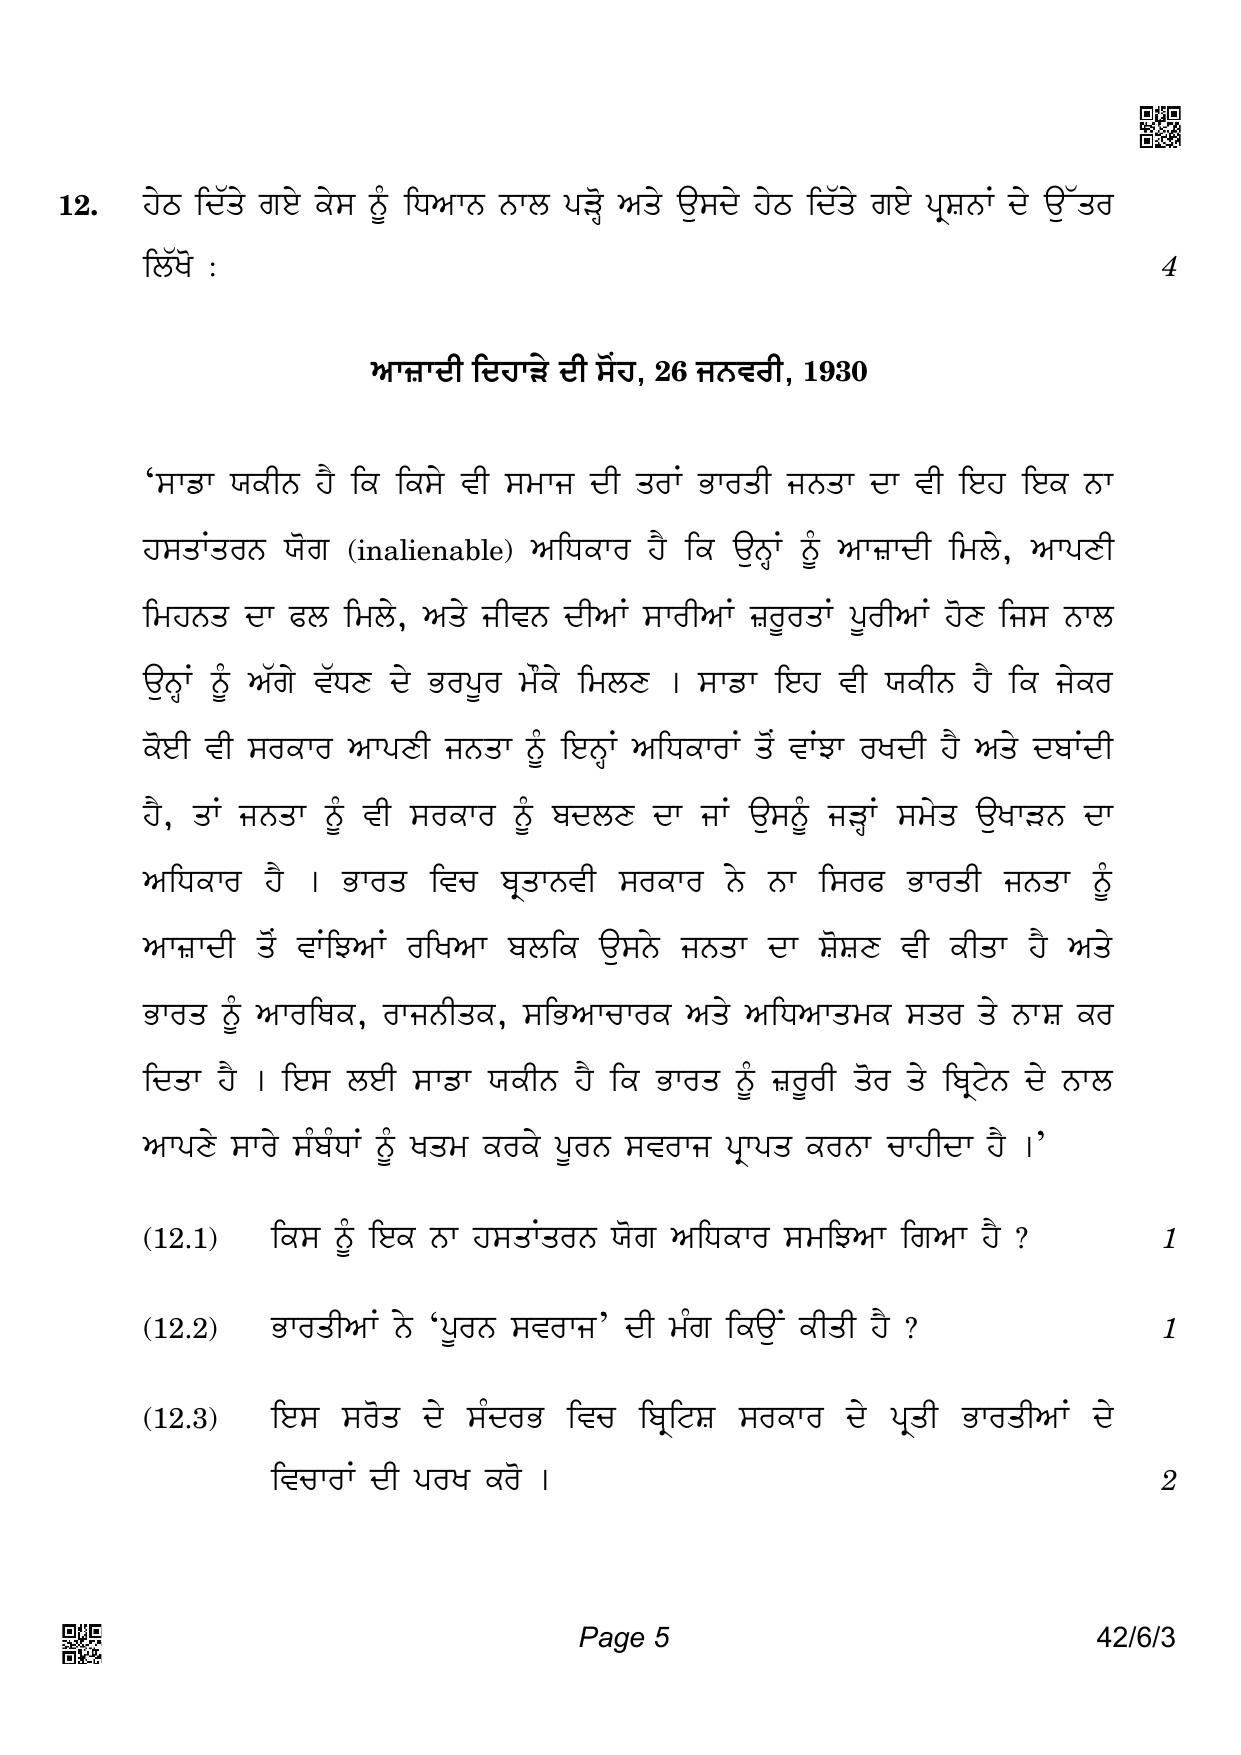 CBSE Class 10 42-6-3_Social Science Punjabi Version 2022 Compartment Question Paper - Page 5